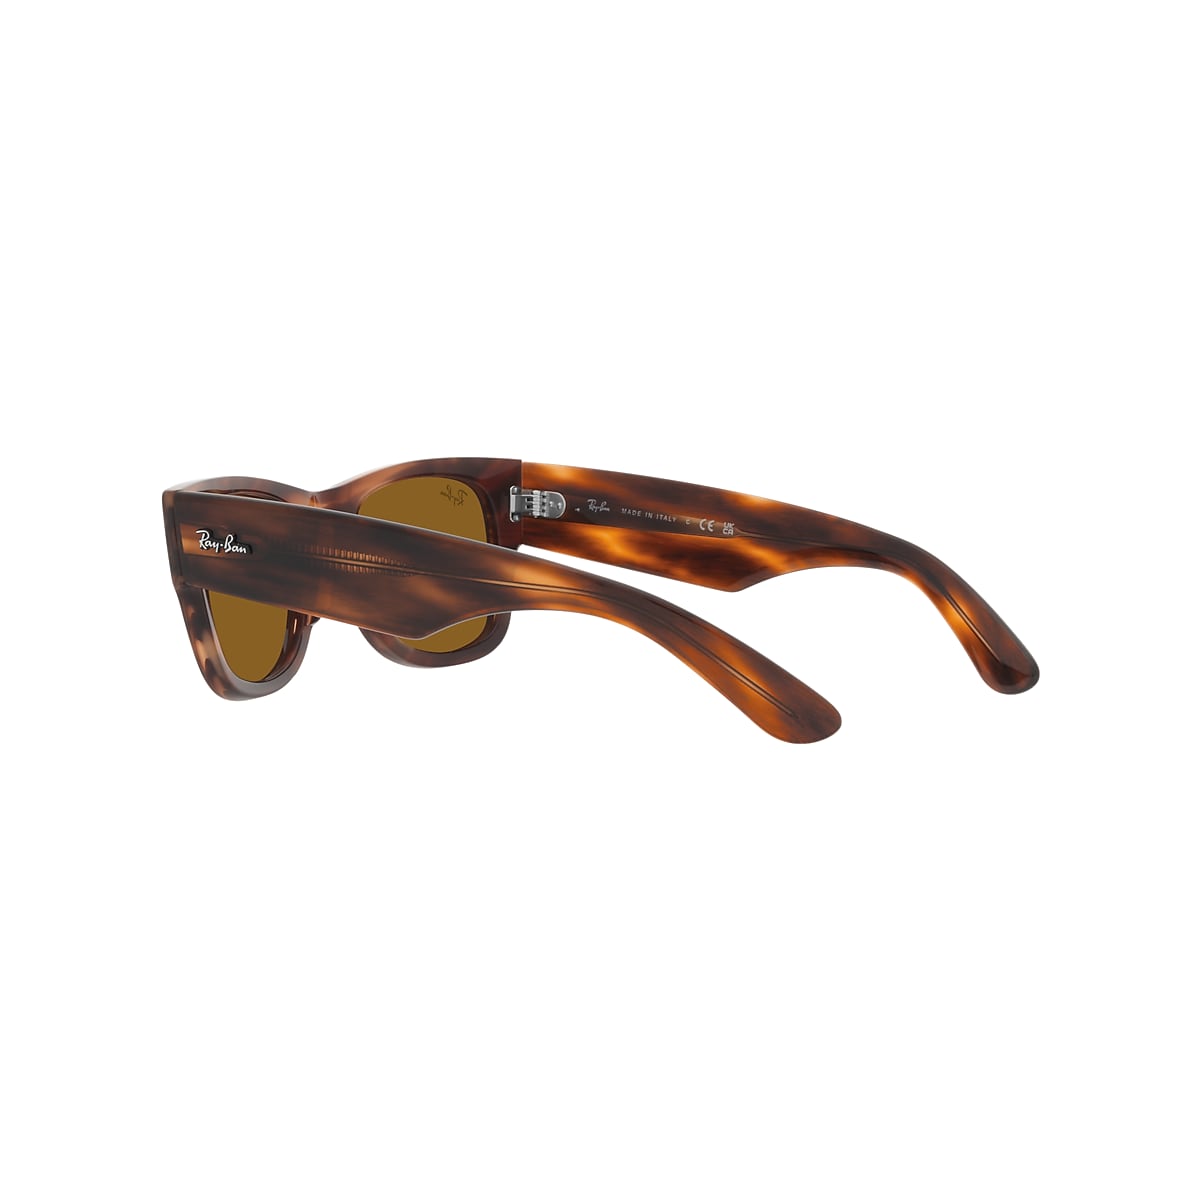 MEGA WAYFARER Sunglasses in Striped Havana and Brown - RB0840S